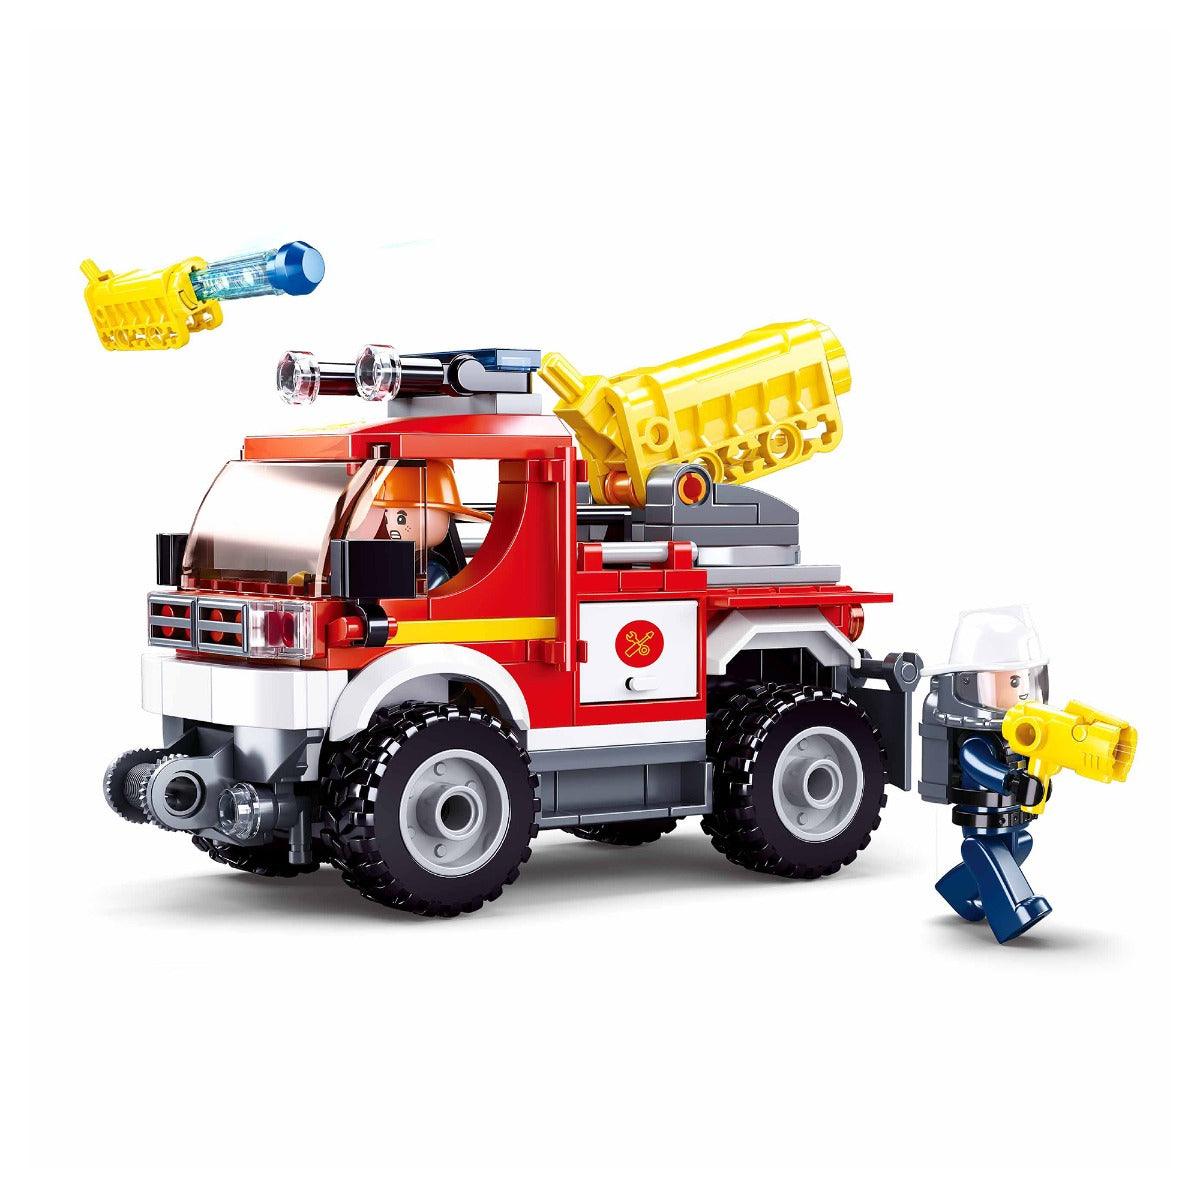 Sluban Fire Engine Building Blocks For Ages 6+